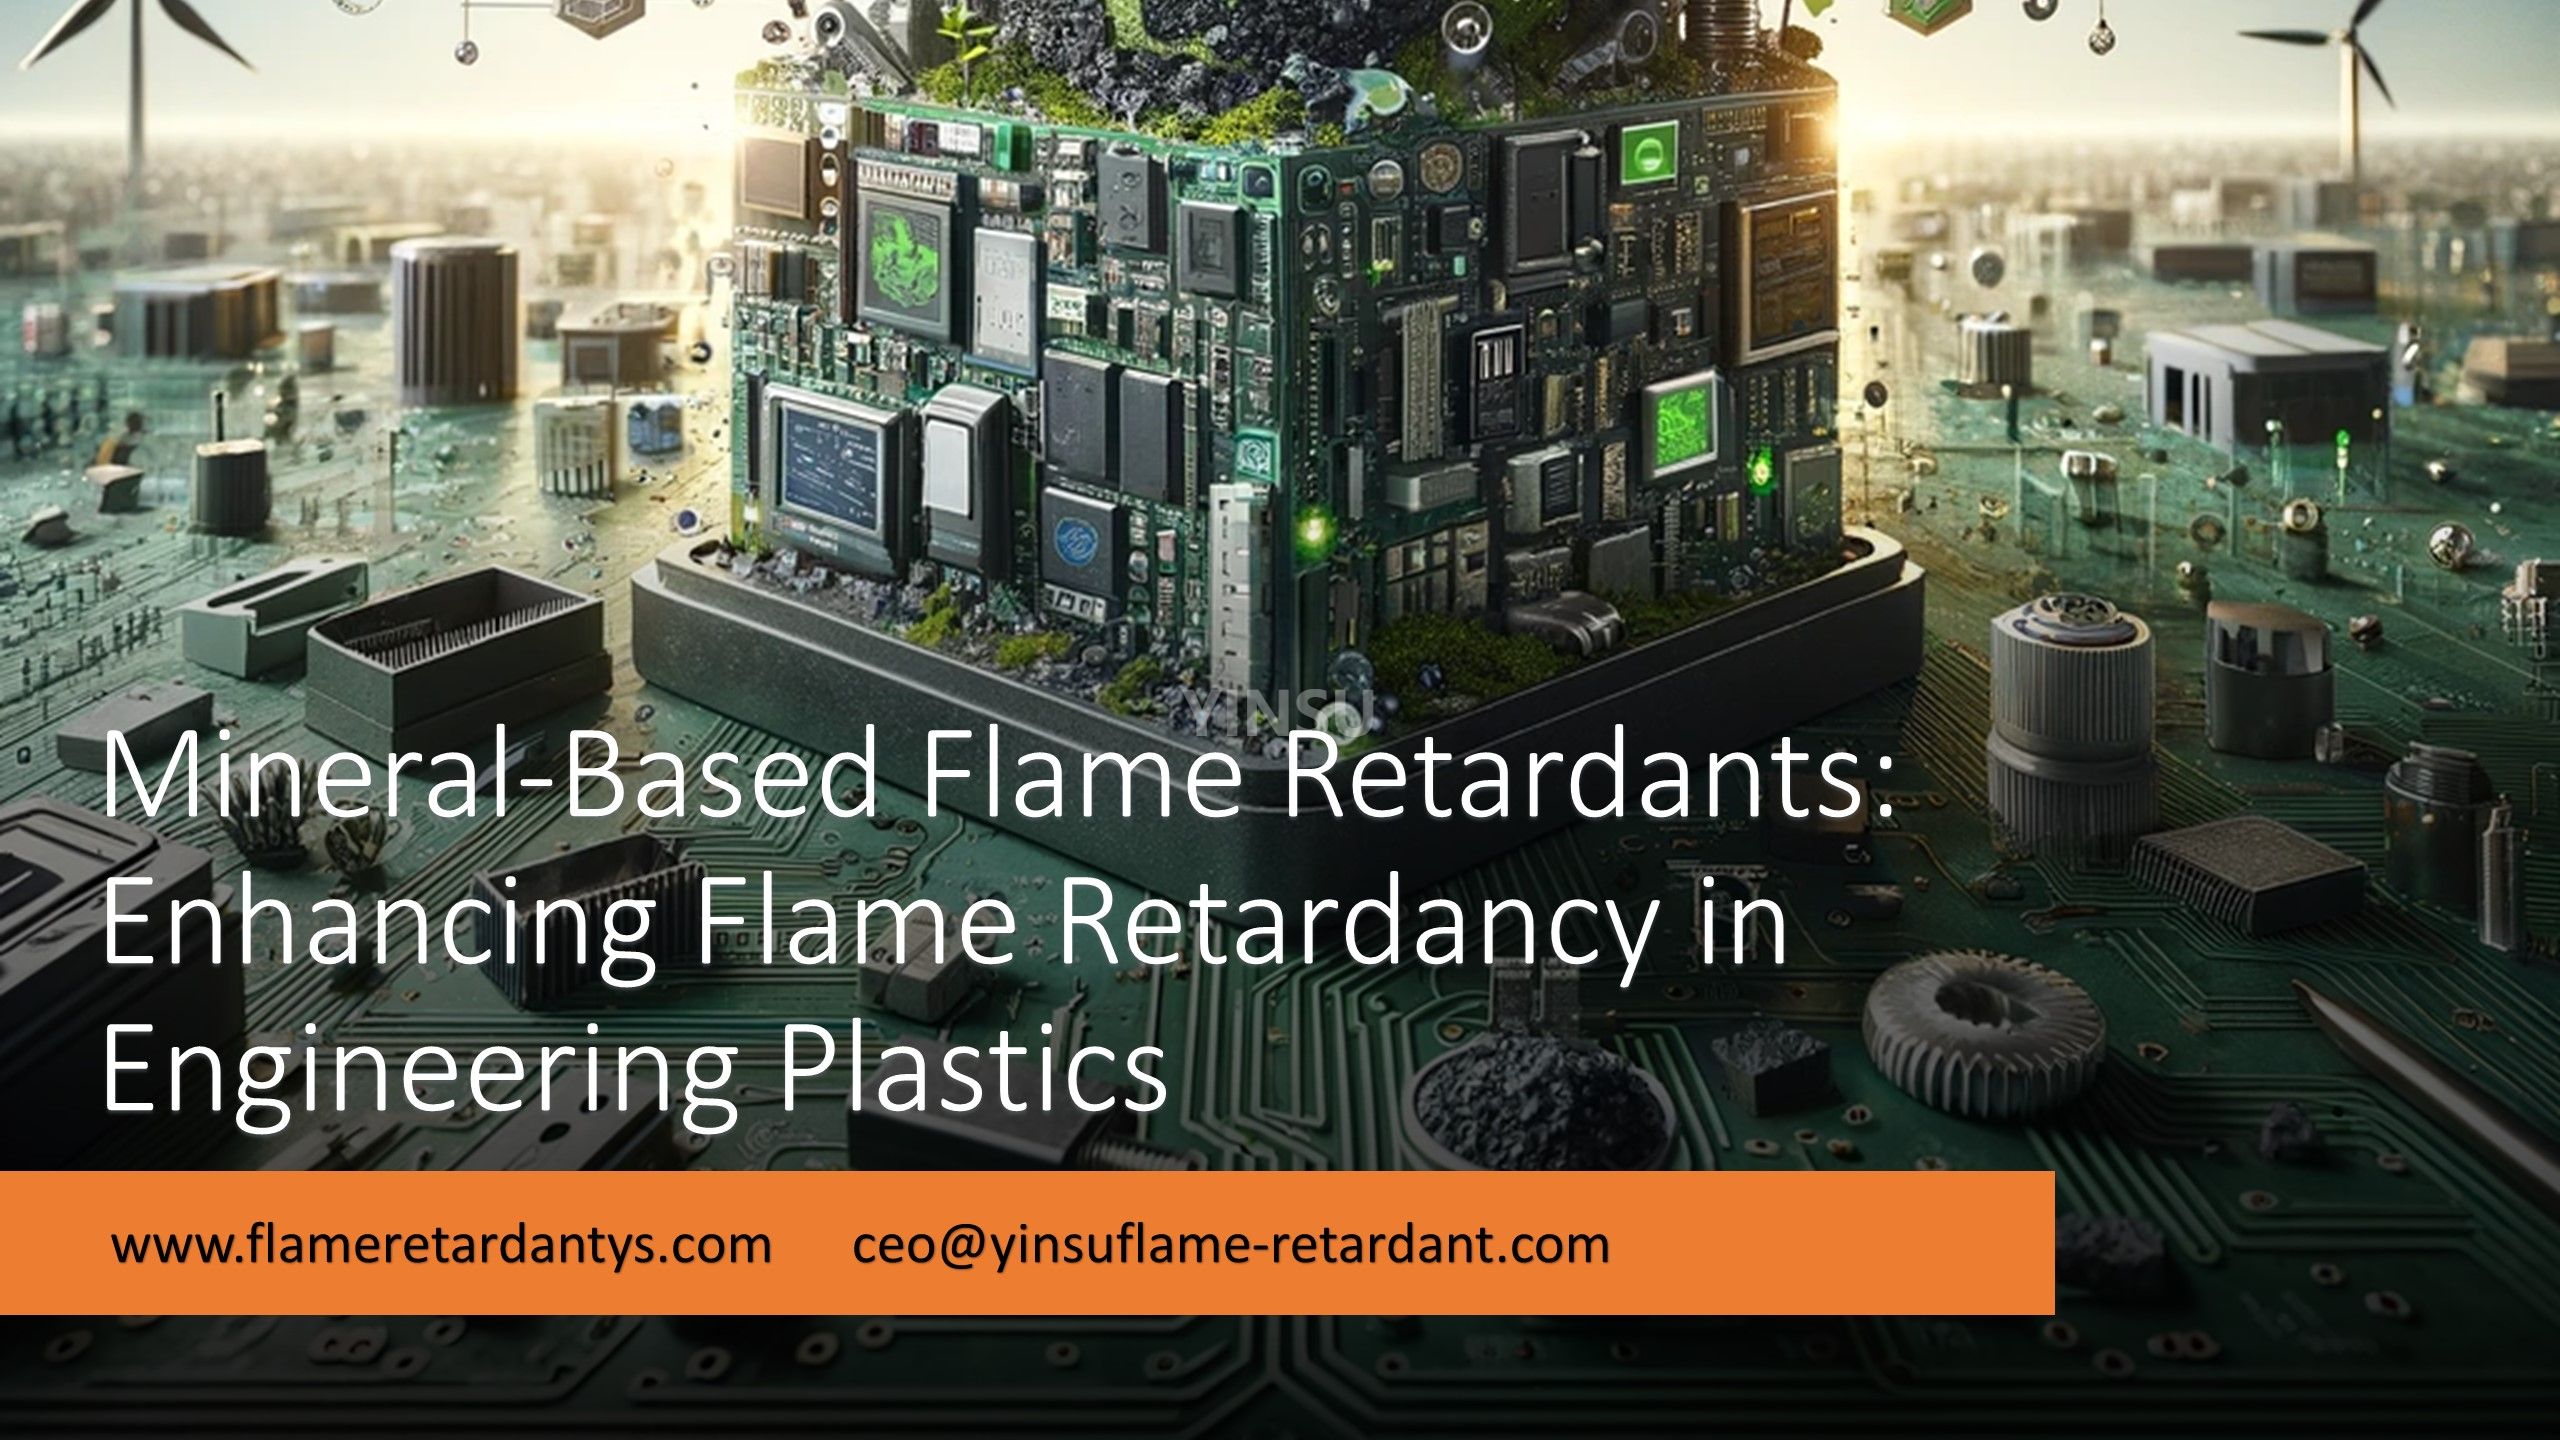 Mineral-Based Flame Retardants: Enhancing Flame Retardancy in Engineering Plastics